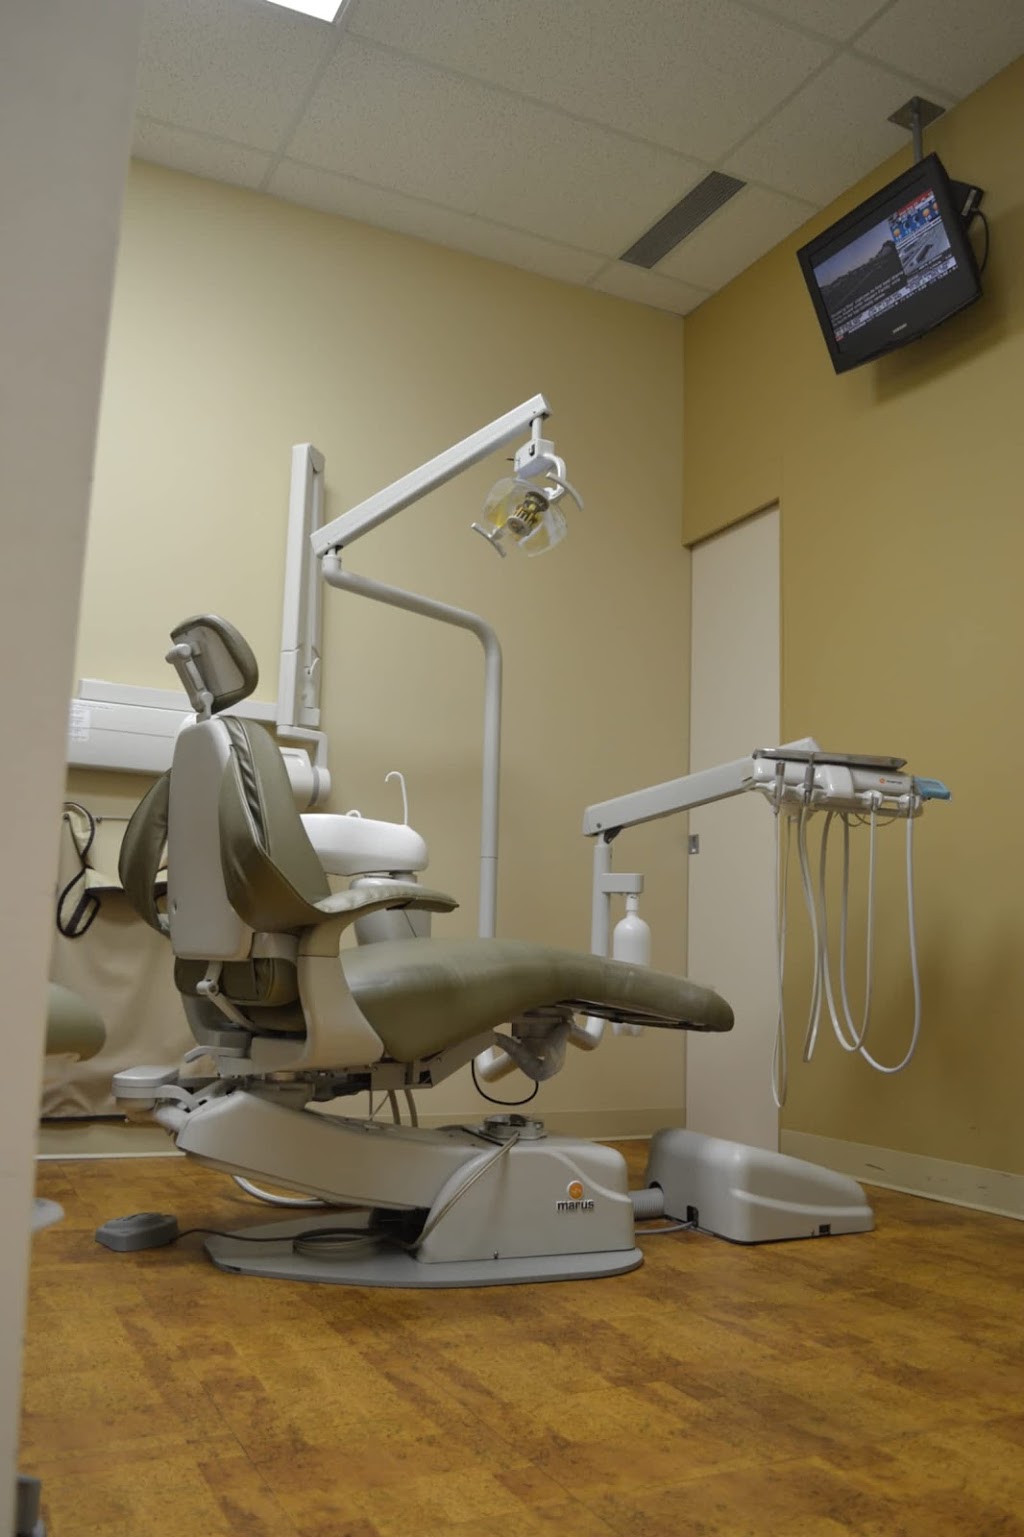 Stevenson Dental Care | 575 Laval Dr Unit 500, Oshawa, ON L1J 0B6, Canada | Phone: (905) 438-8818